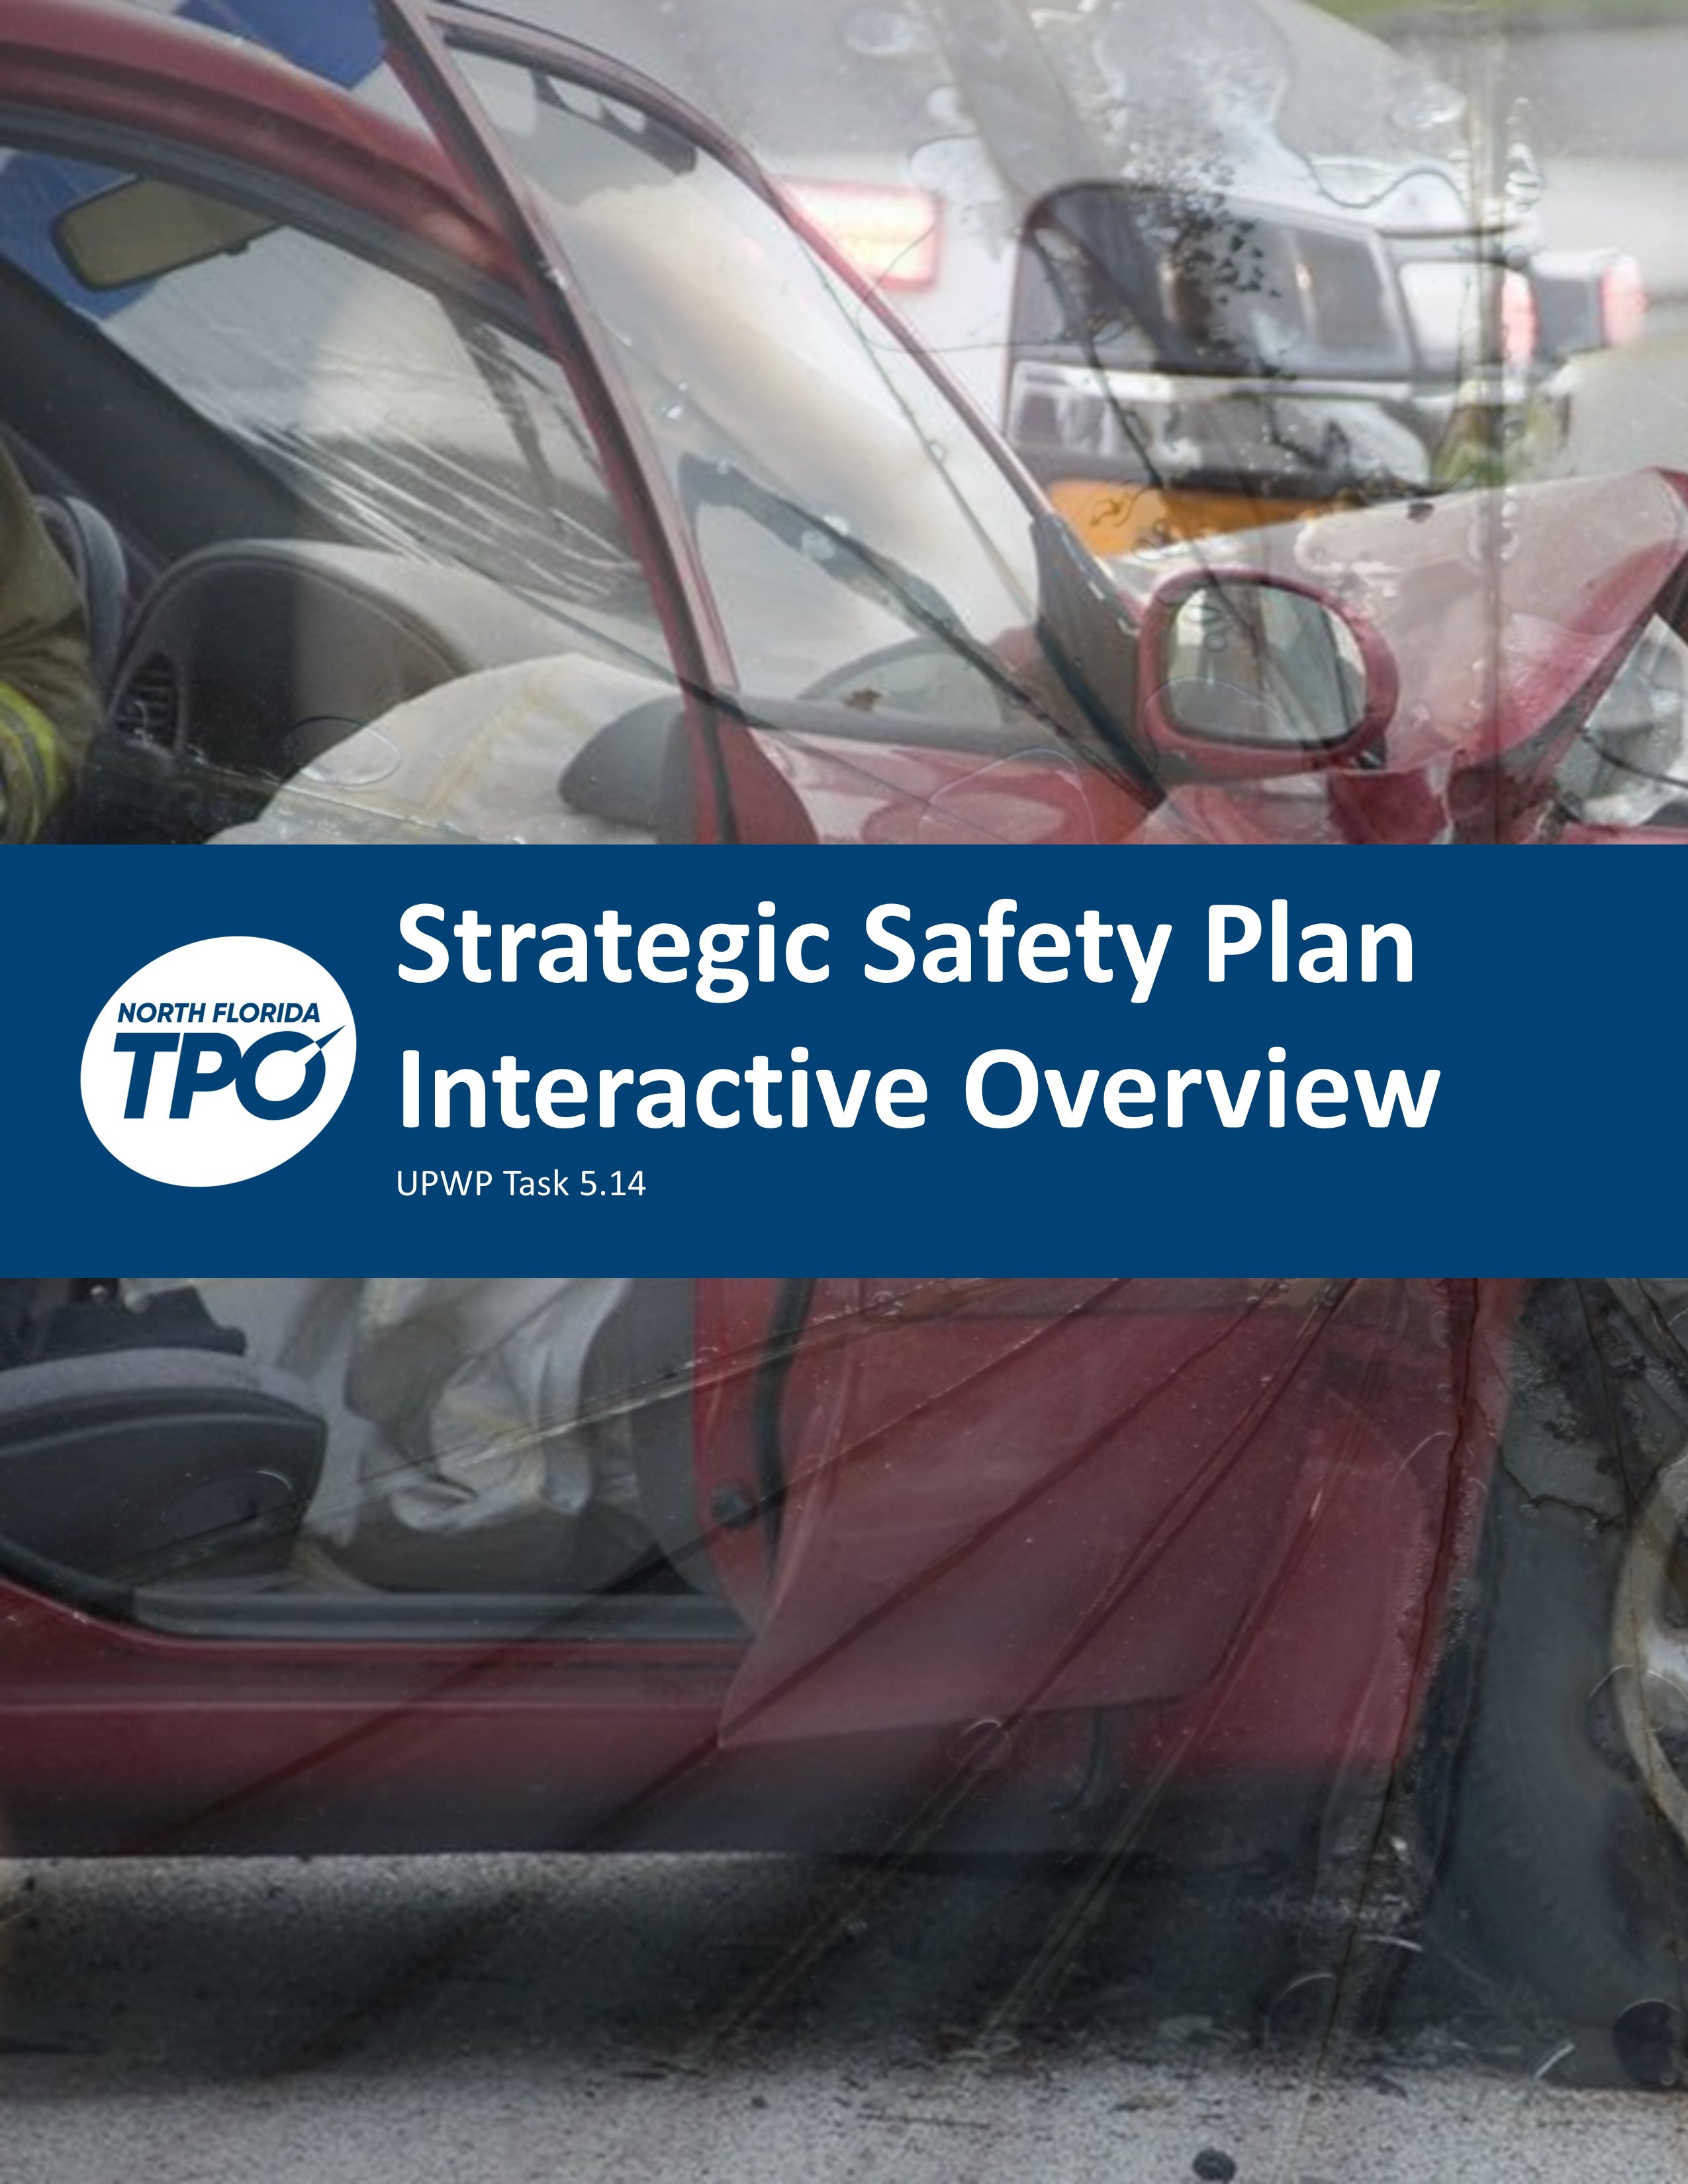 Strategic Safety Plan Overview